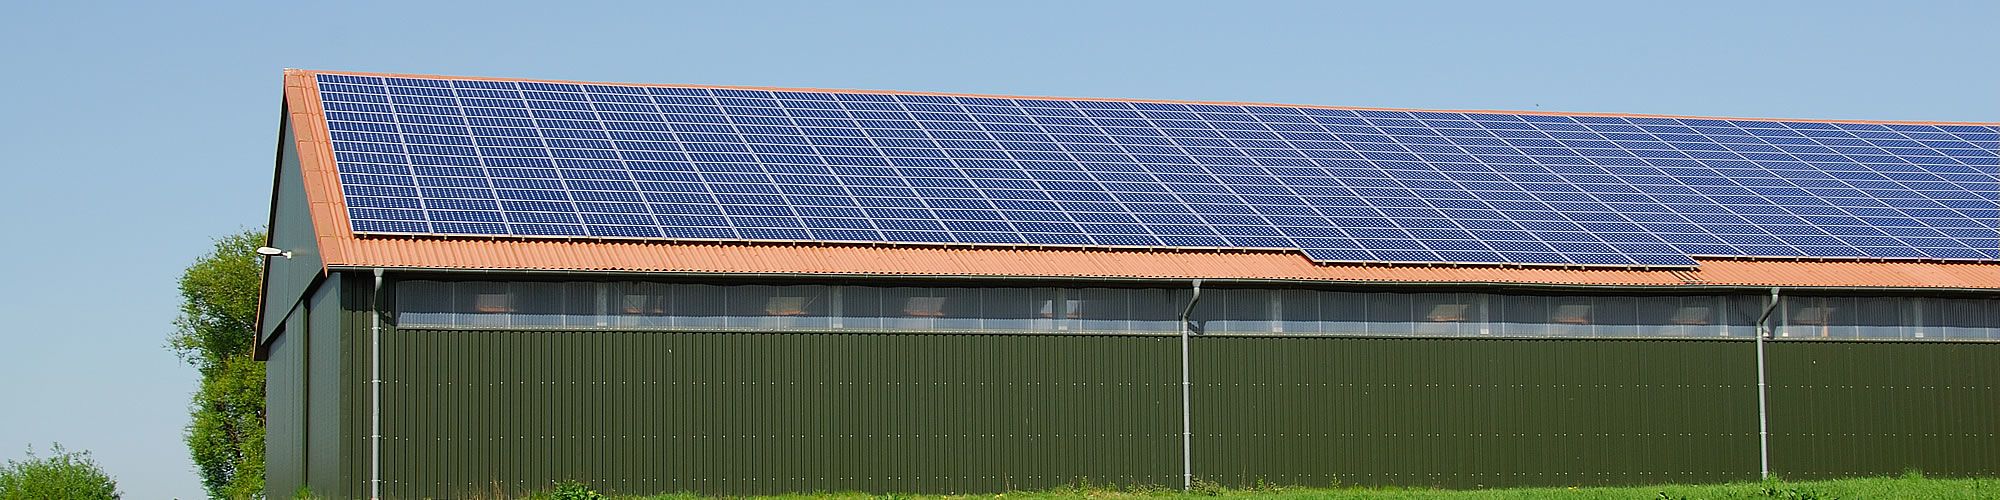 Photovoltaik-Hallen